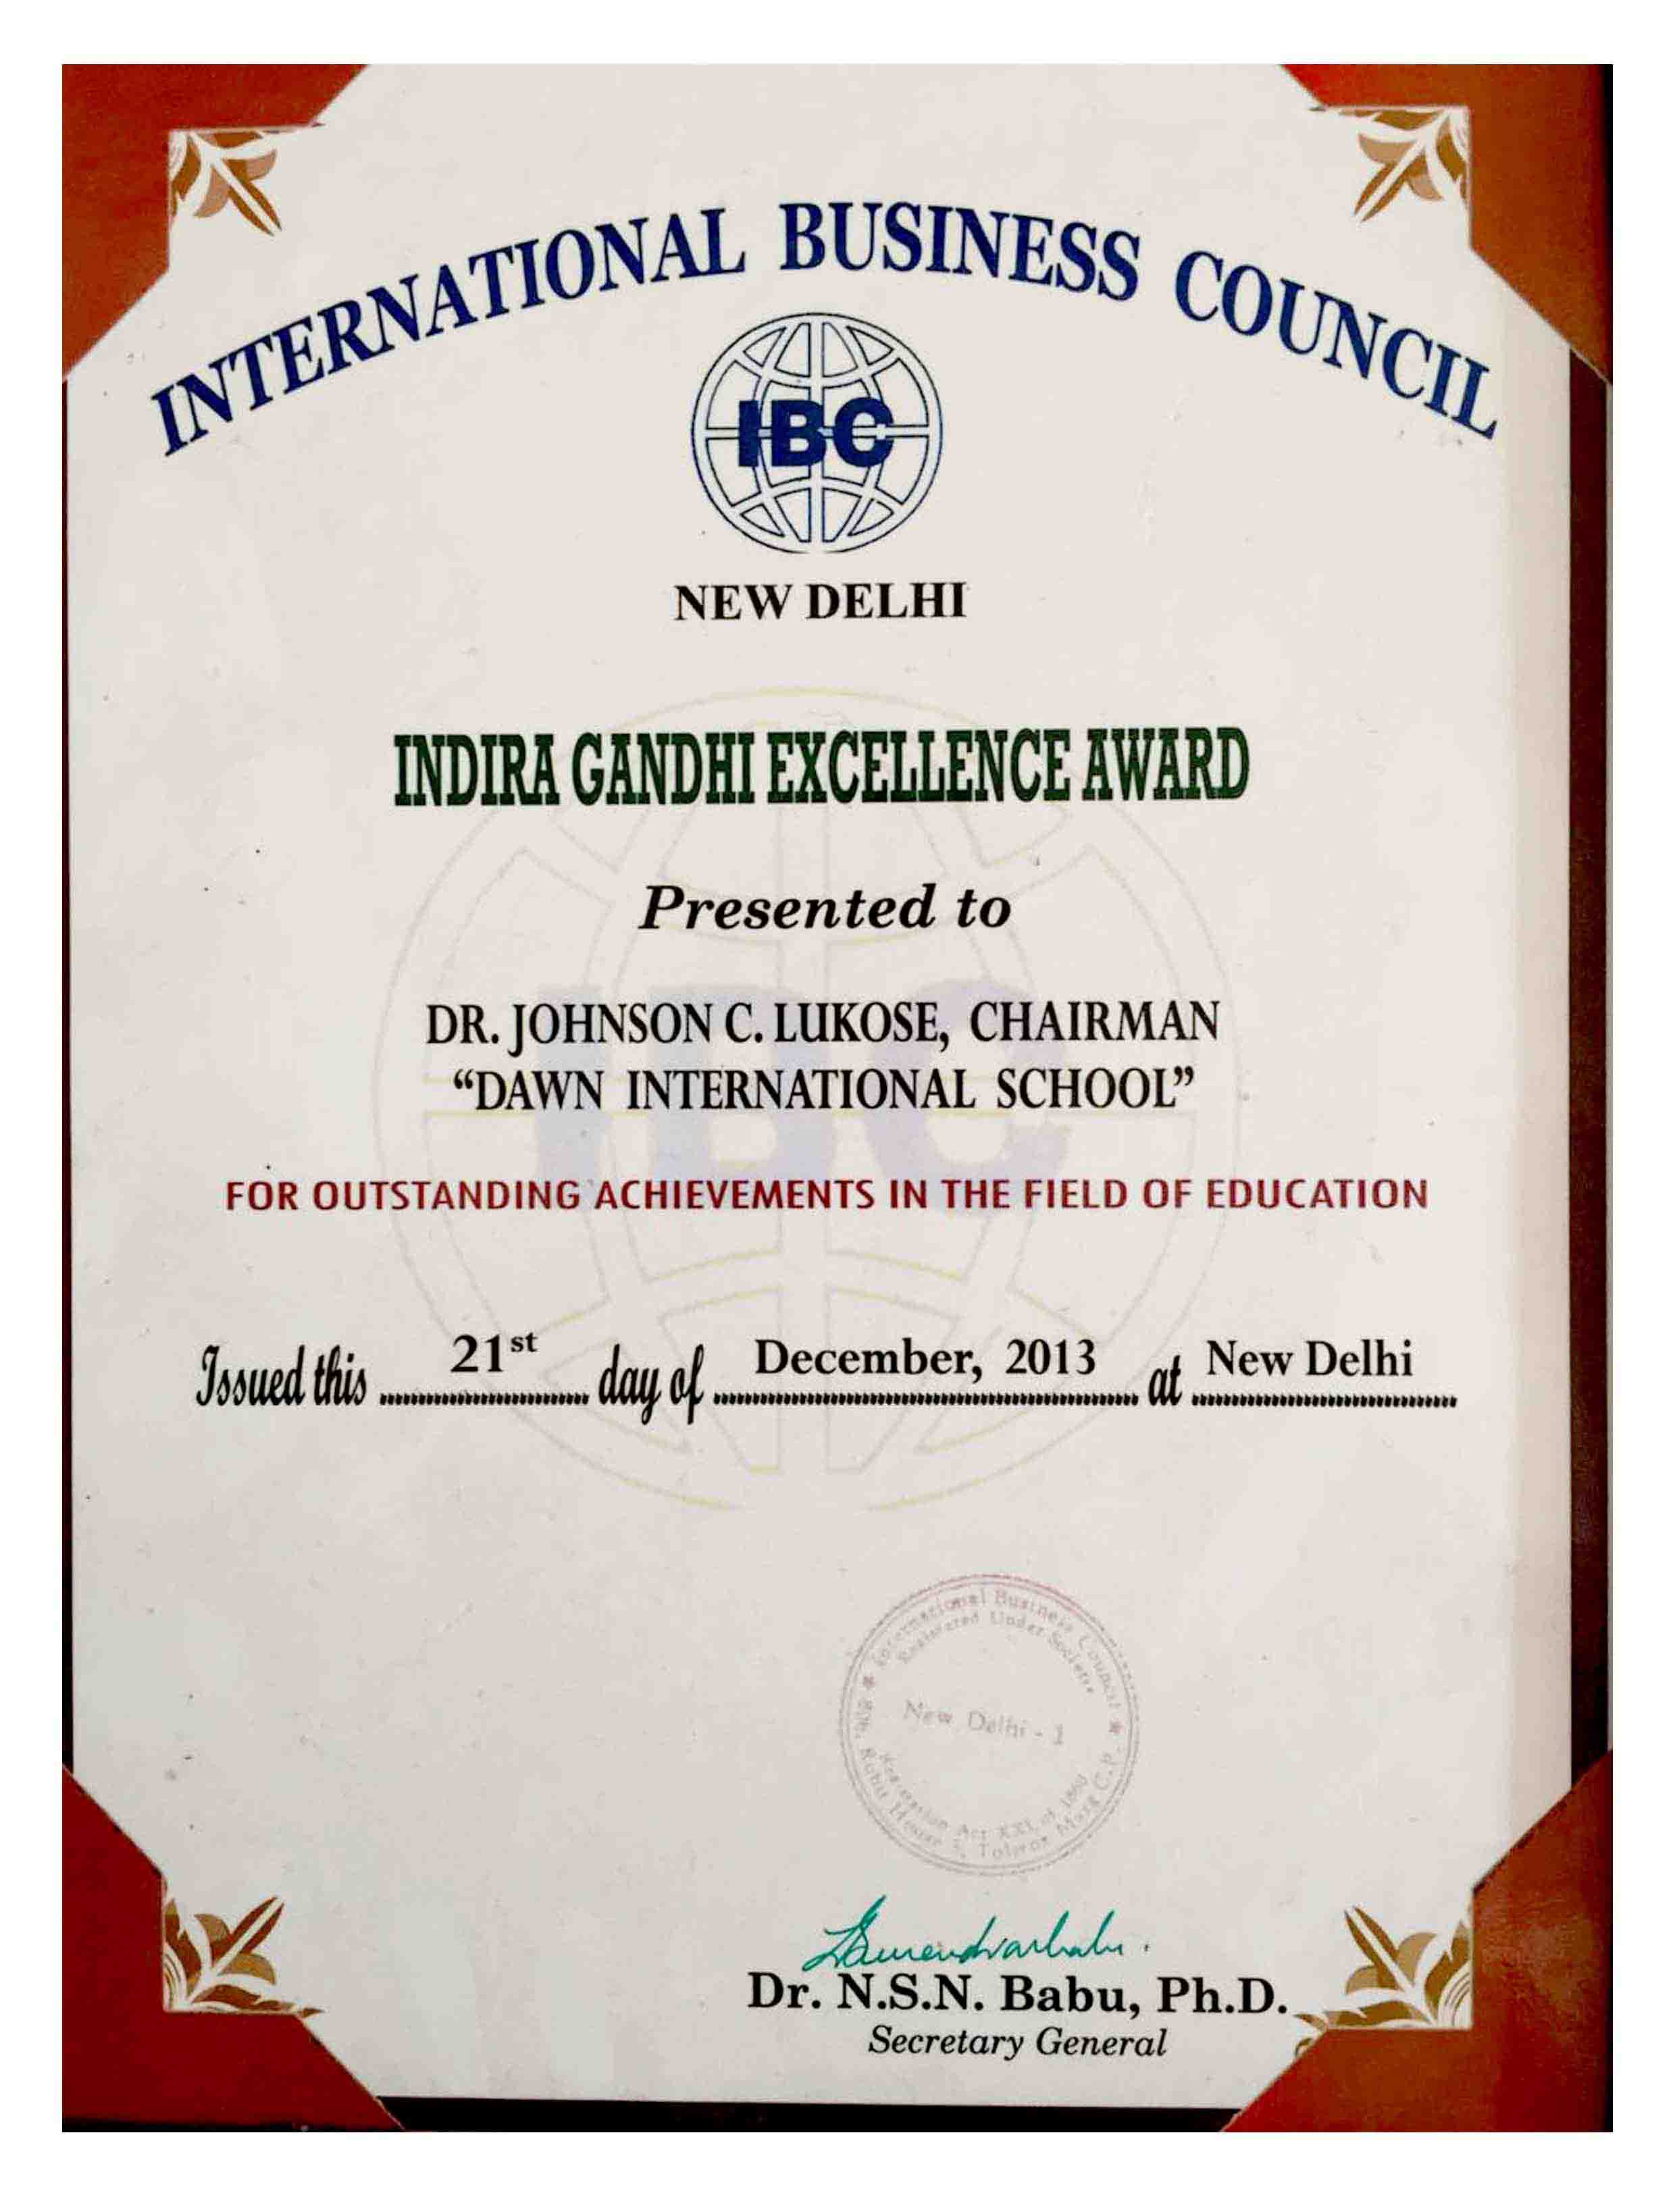 INTERNATIONAL BUSINESS COUNCIL INDIRA GANDHI EXCELLENCE AWARD